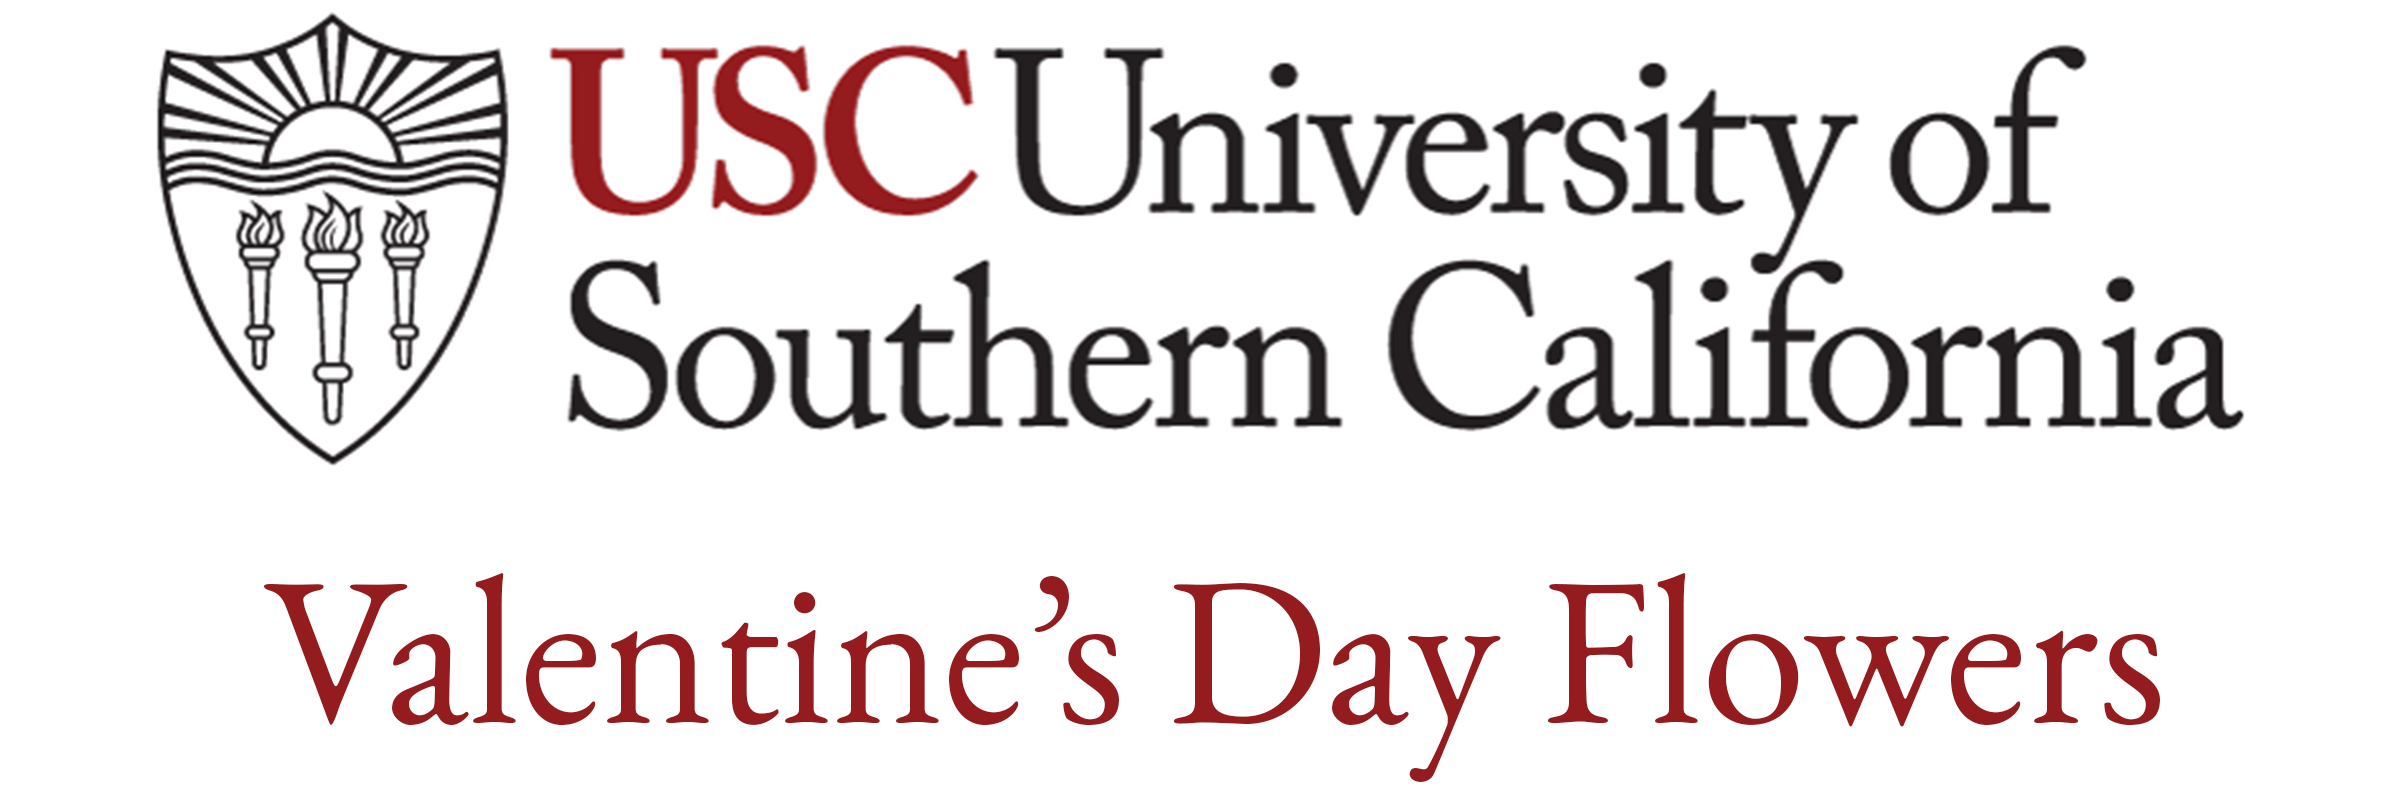 University of Southern California Valentine’s Day